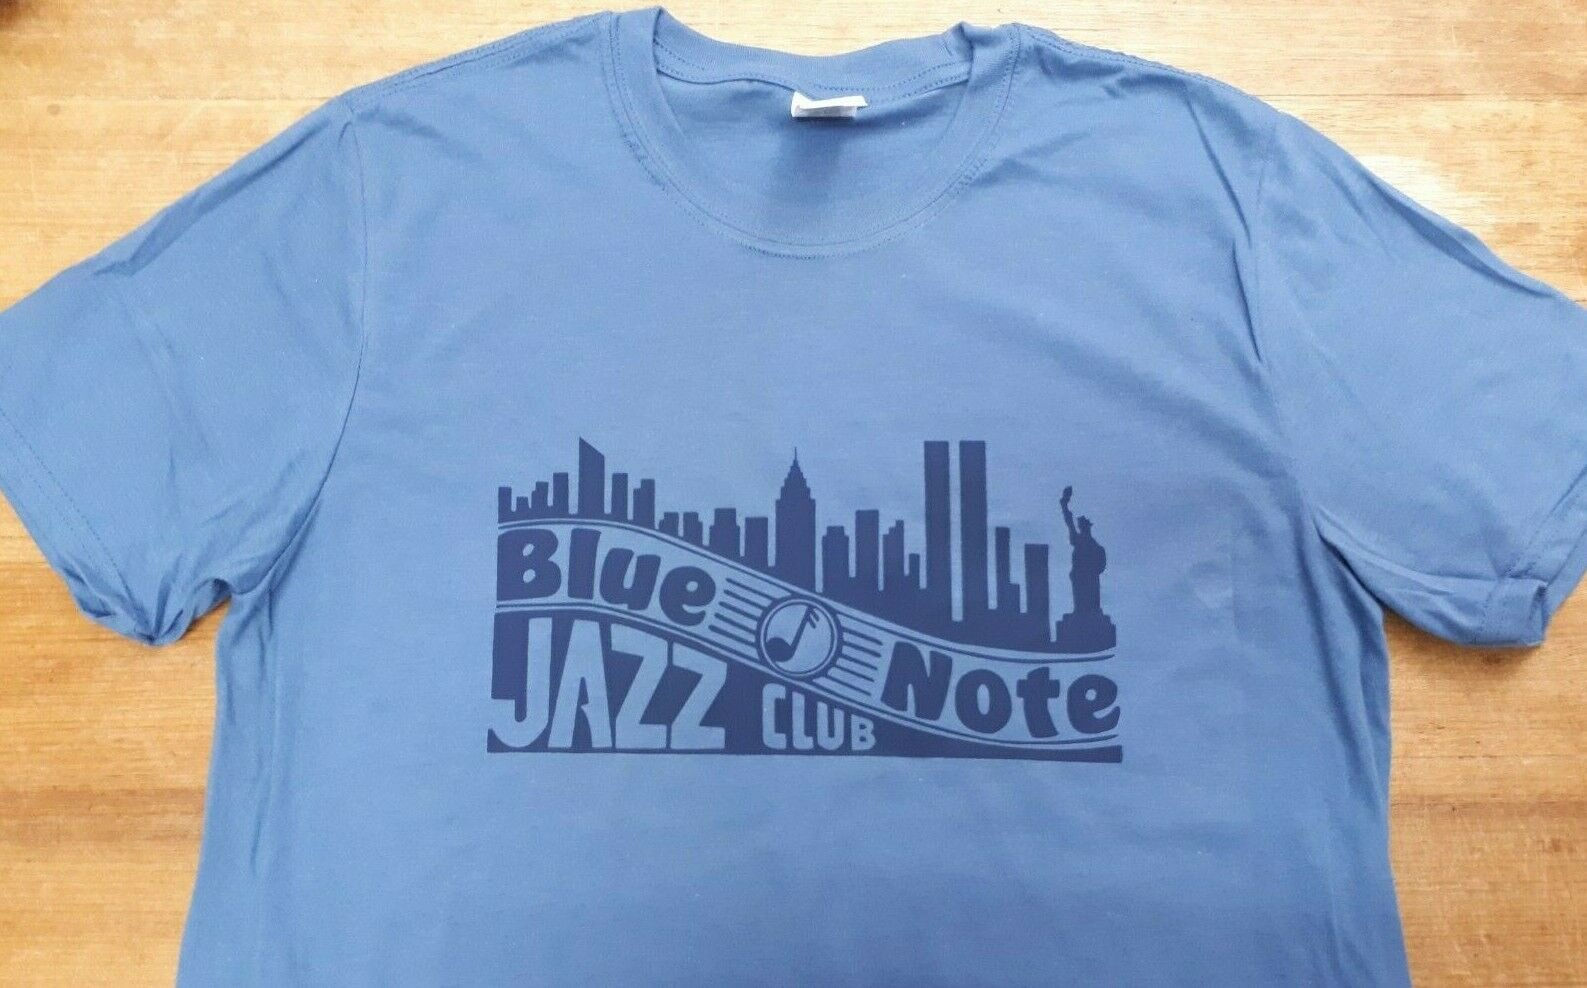 GoodtoGo Designs Blue Note Jazz Club Record Label Unisex Sweatshirt 